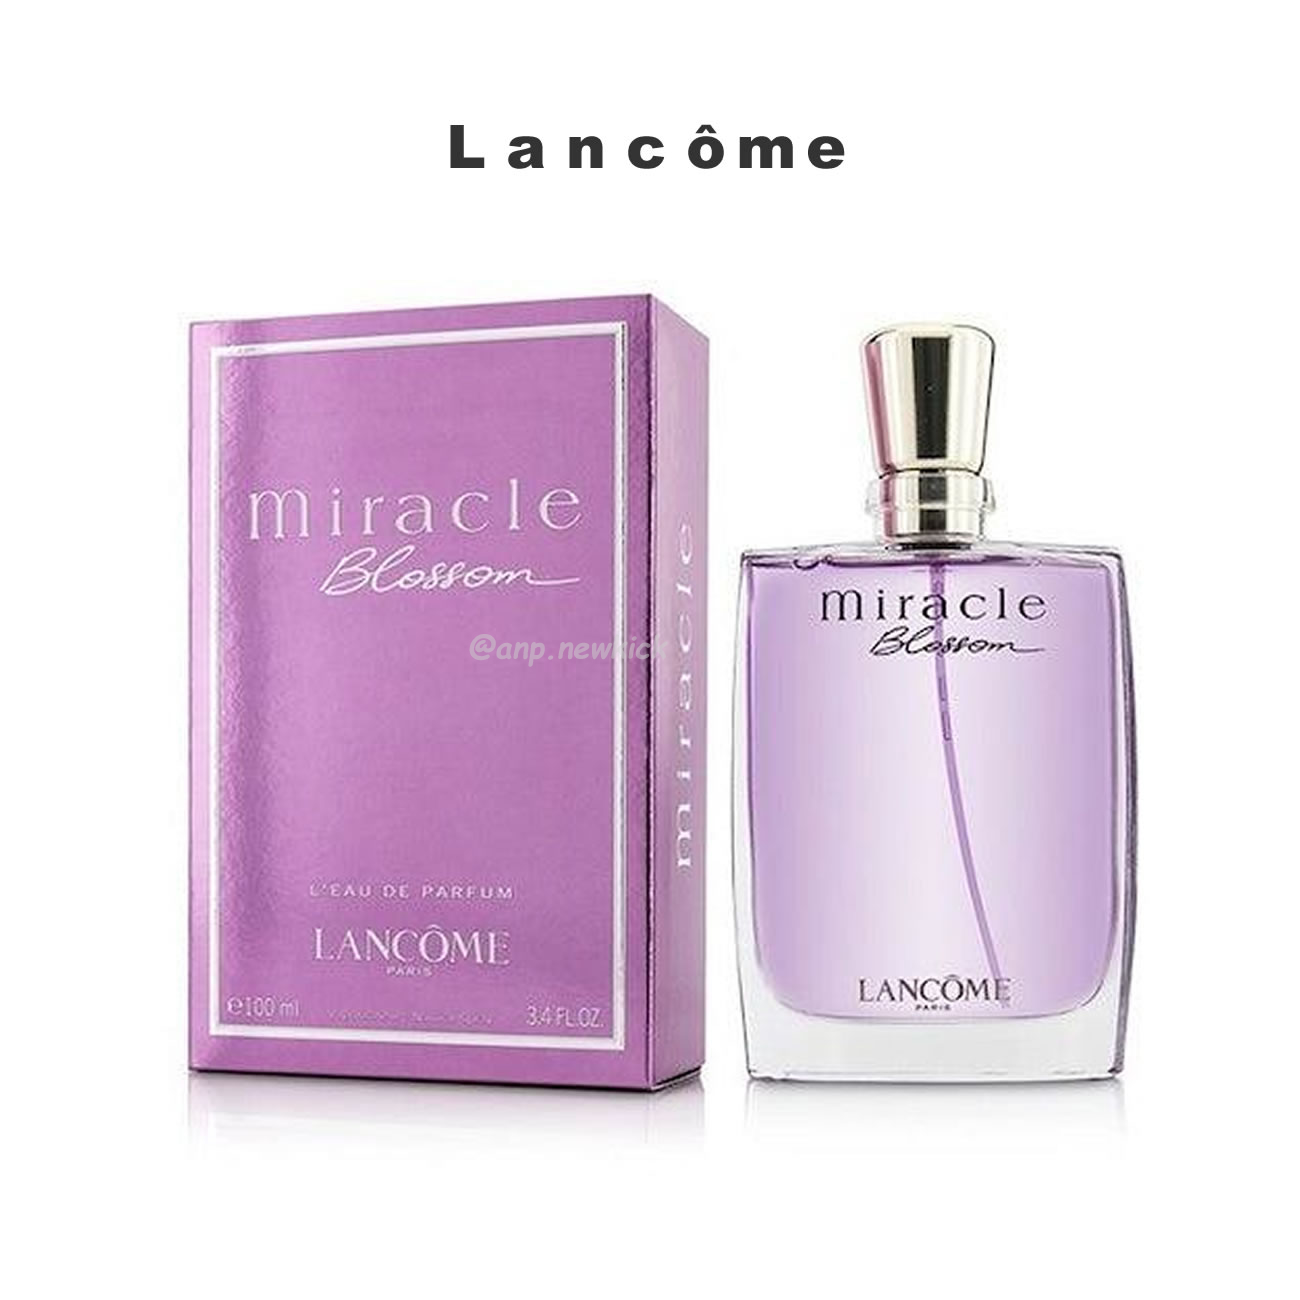 Lancome Miracle Blossom Edp 100ml (1) - newkick.org